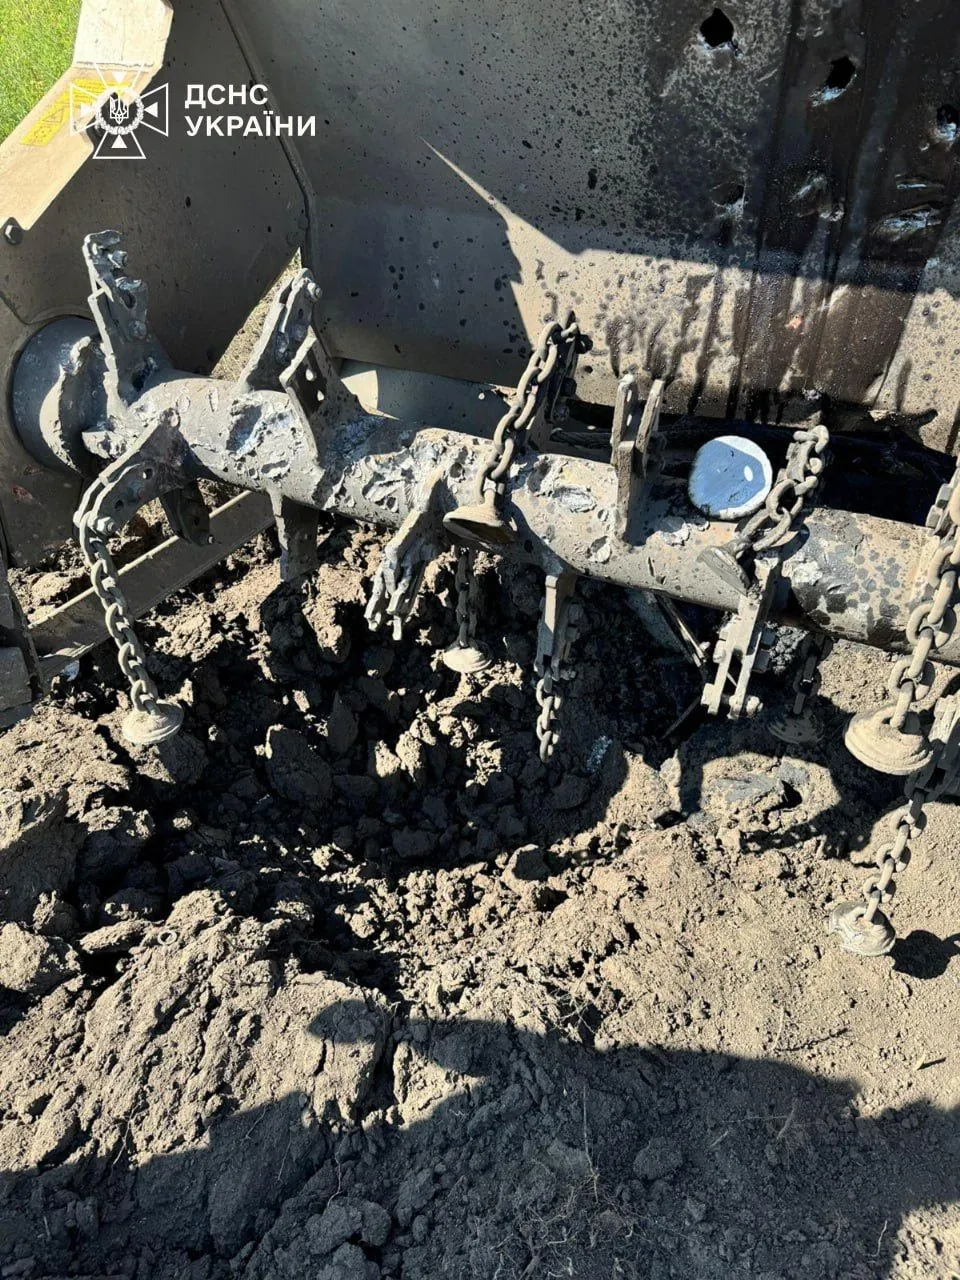 Shell explosion damages demining vehicle in Donetsk region